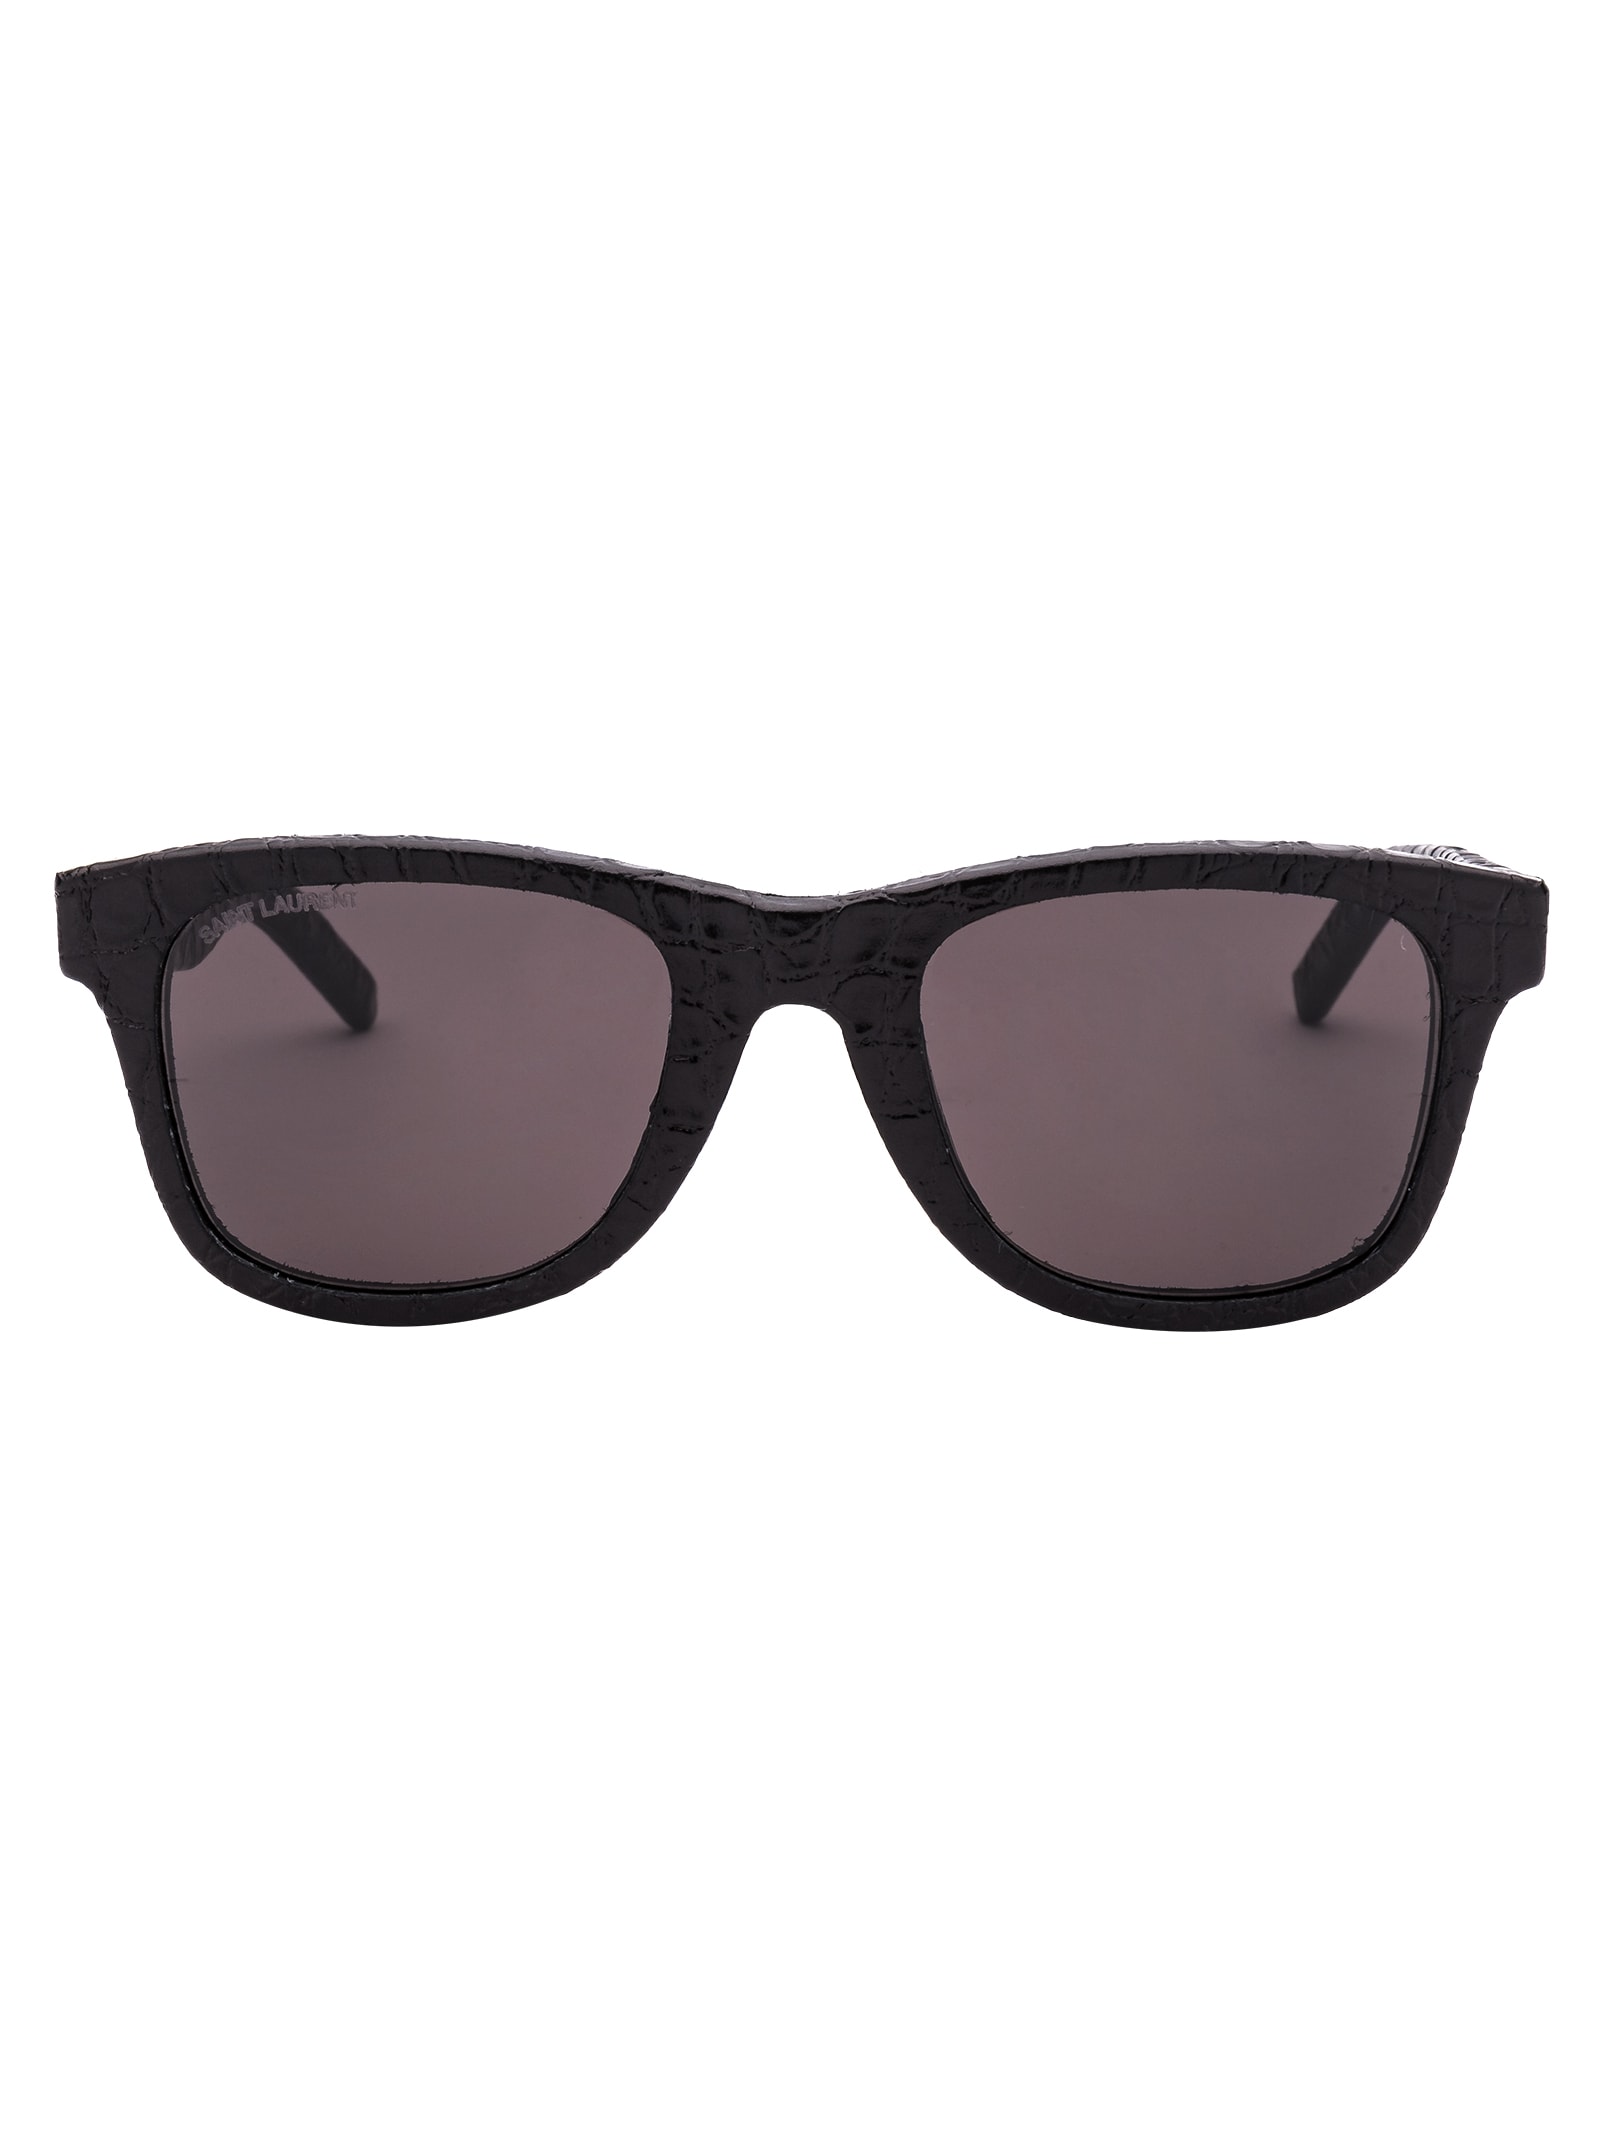 Saint Laurent Sl 51 Sunglasses In 027 Black Black Grey